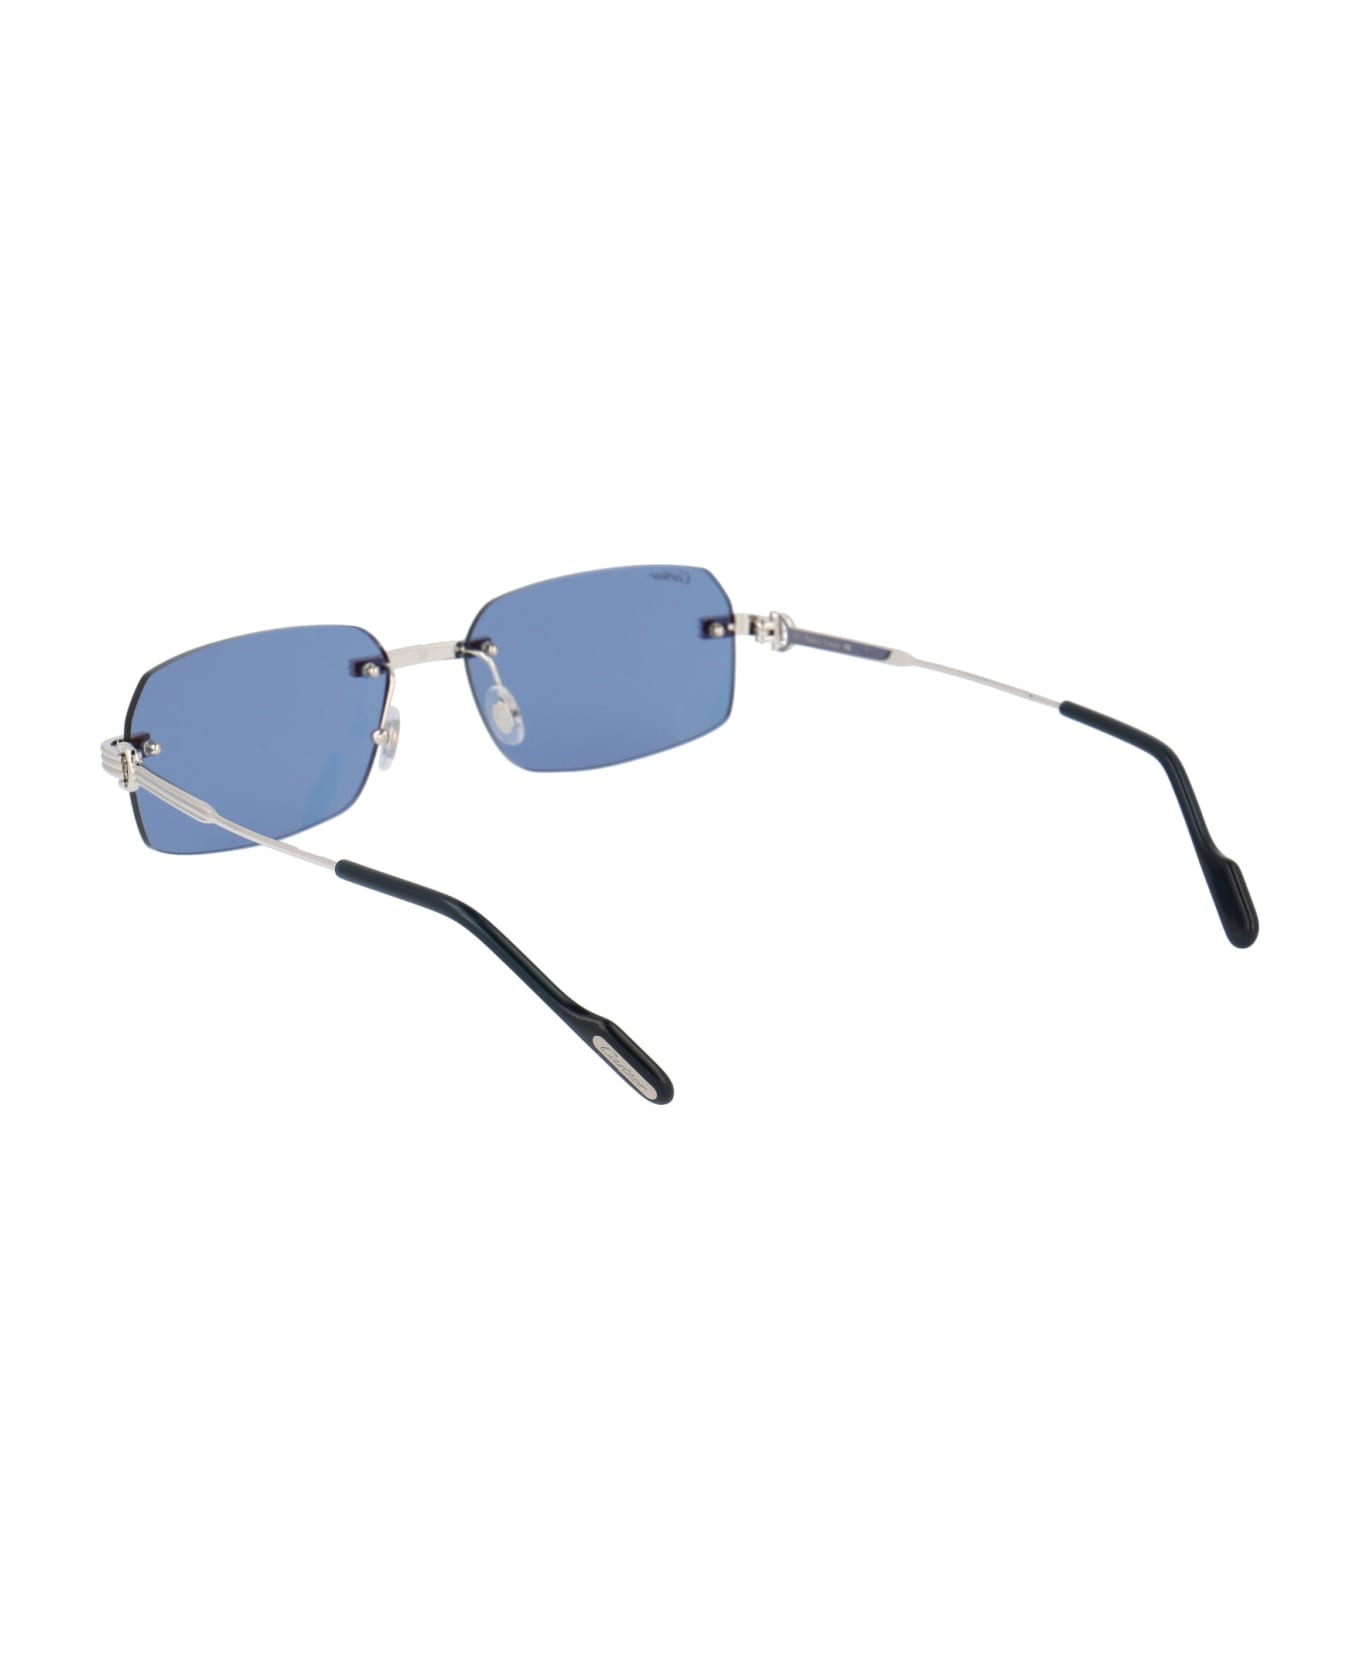 Cartier Eyewear Ct0271s Sunglasses - 003 SILVER SILVER BLUE サングラス